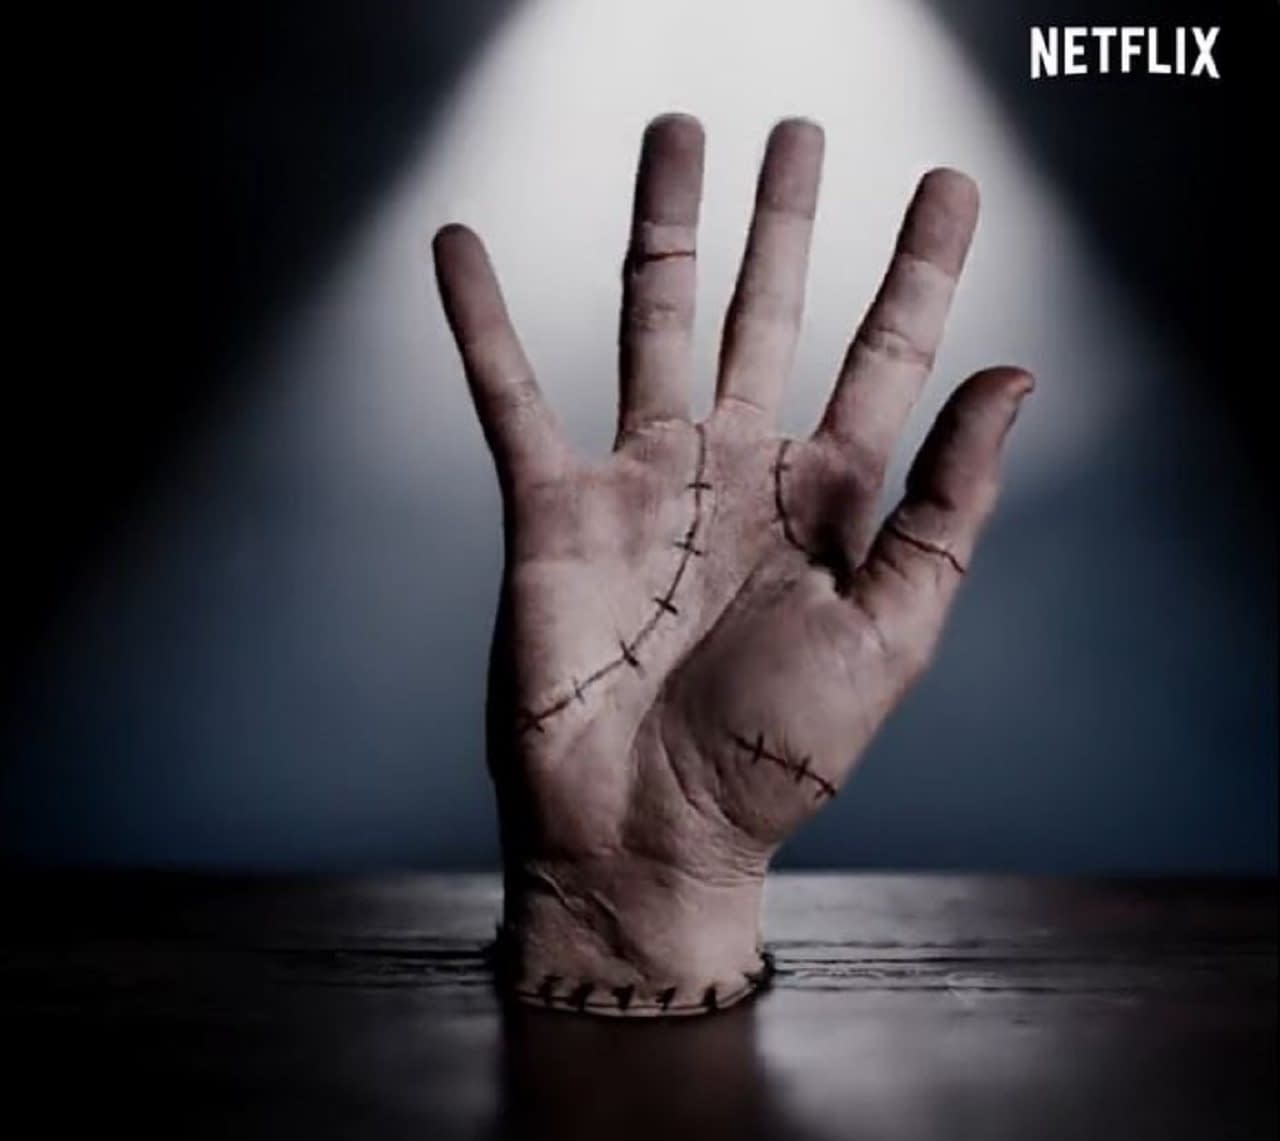 Wednesday Netflix TV Show Cast on Working With Director Tim Burton